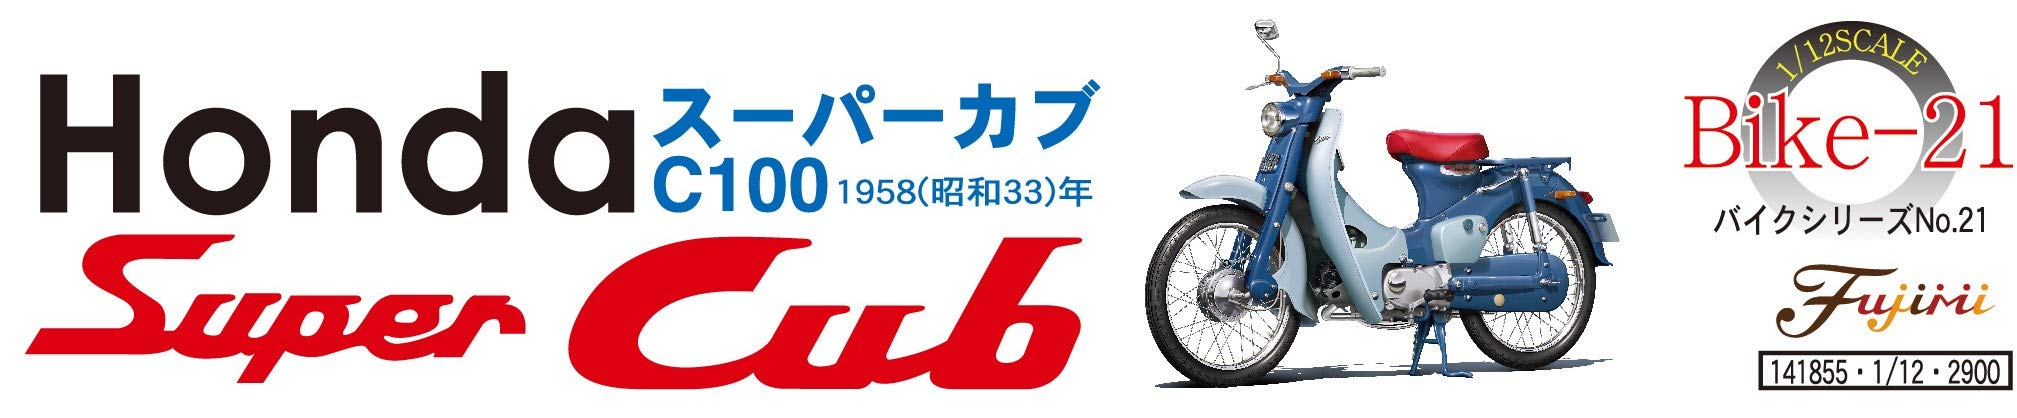 Fujimi 1/12 Bike Series No. 21 Honda Super Cub C100 1958 Japanese Cub Model